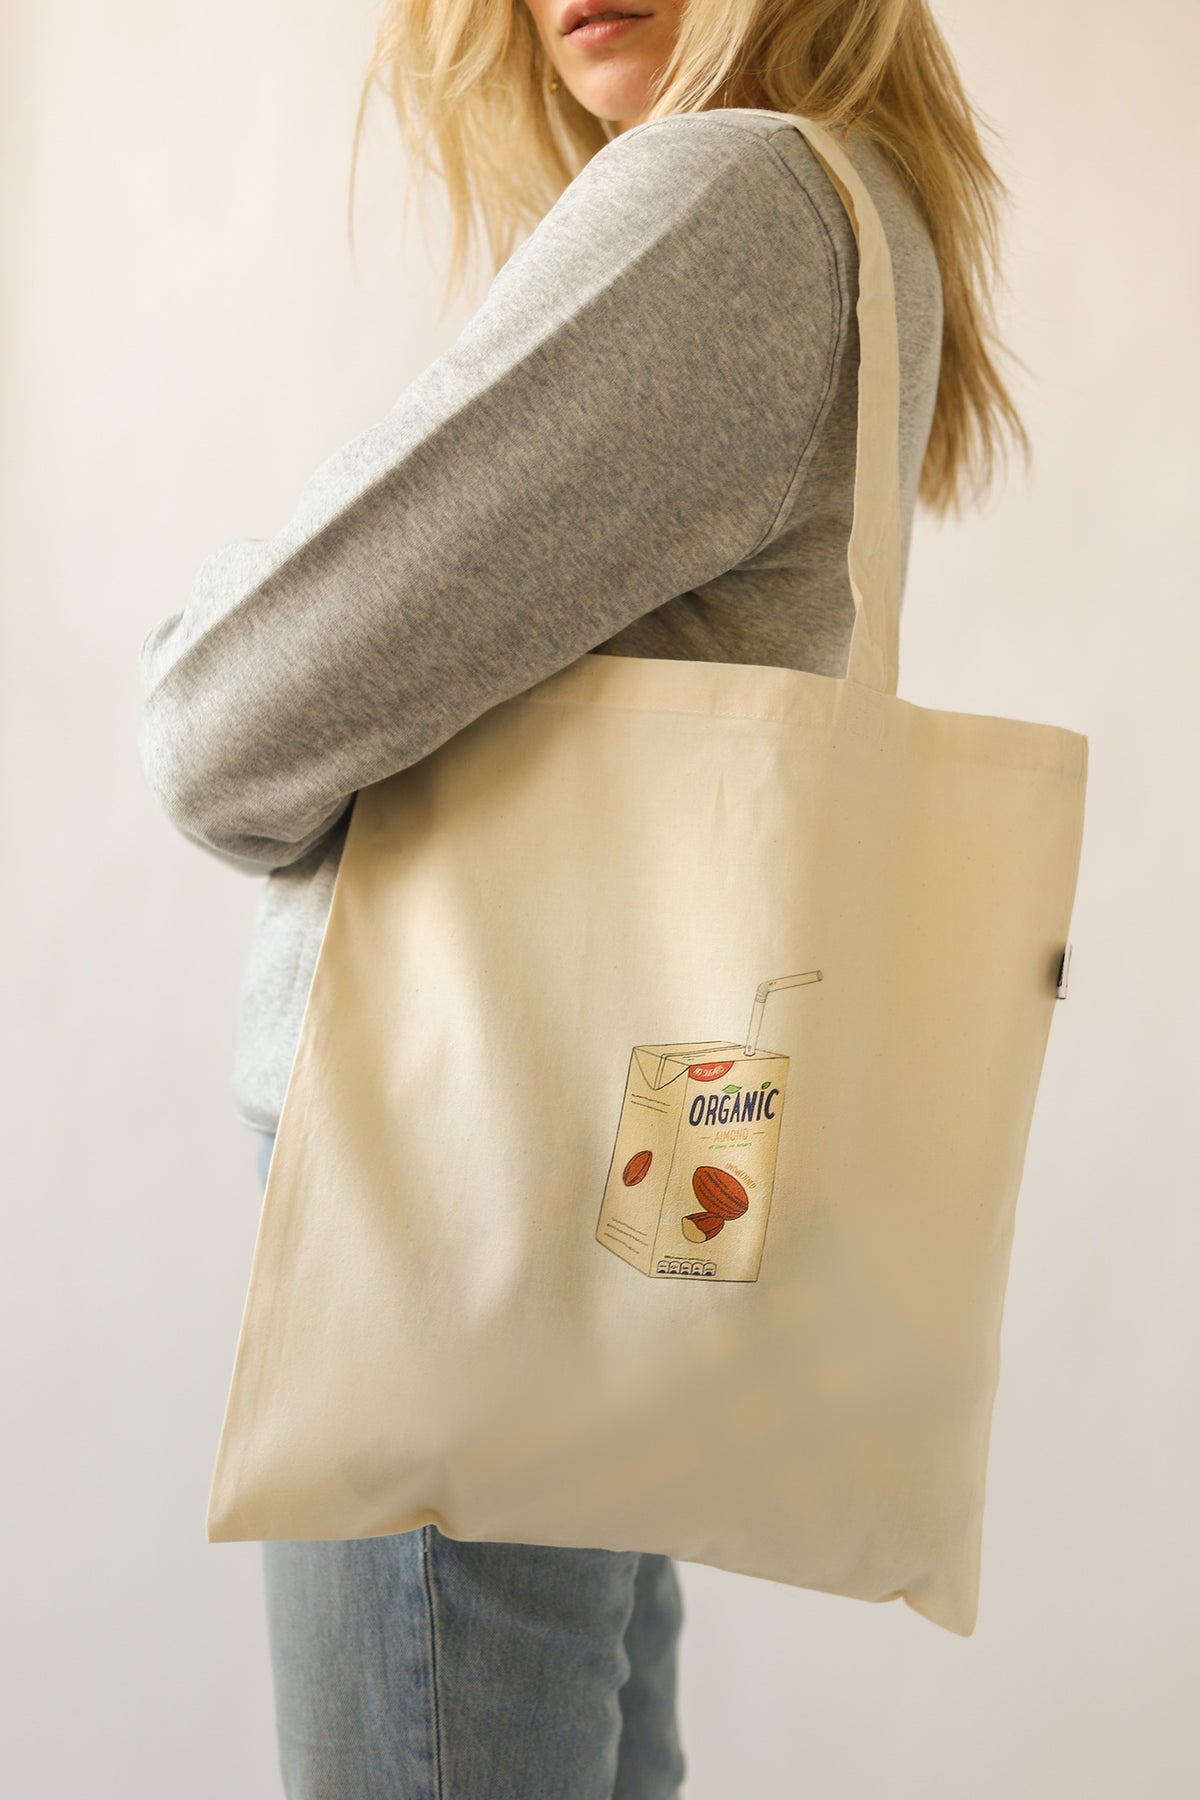 Organic Cotton Tote Bags - Heiko Clothing